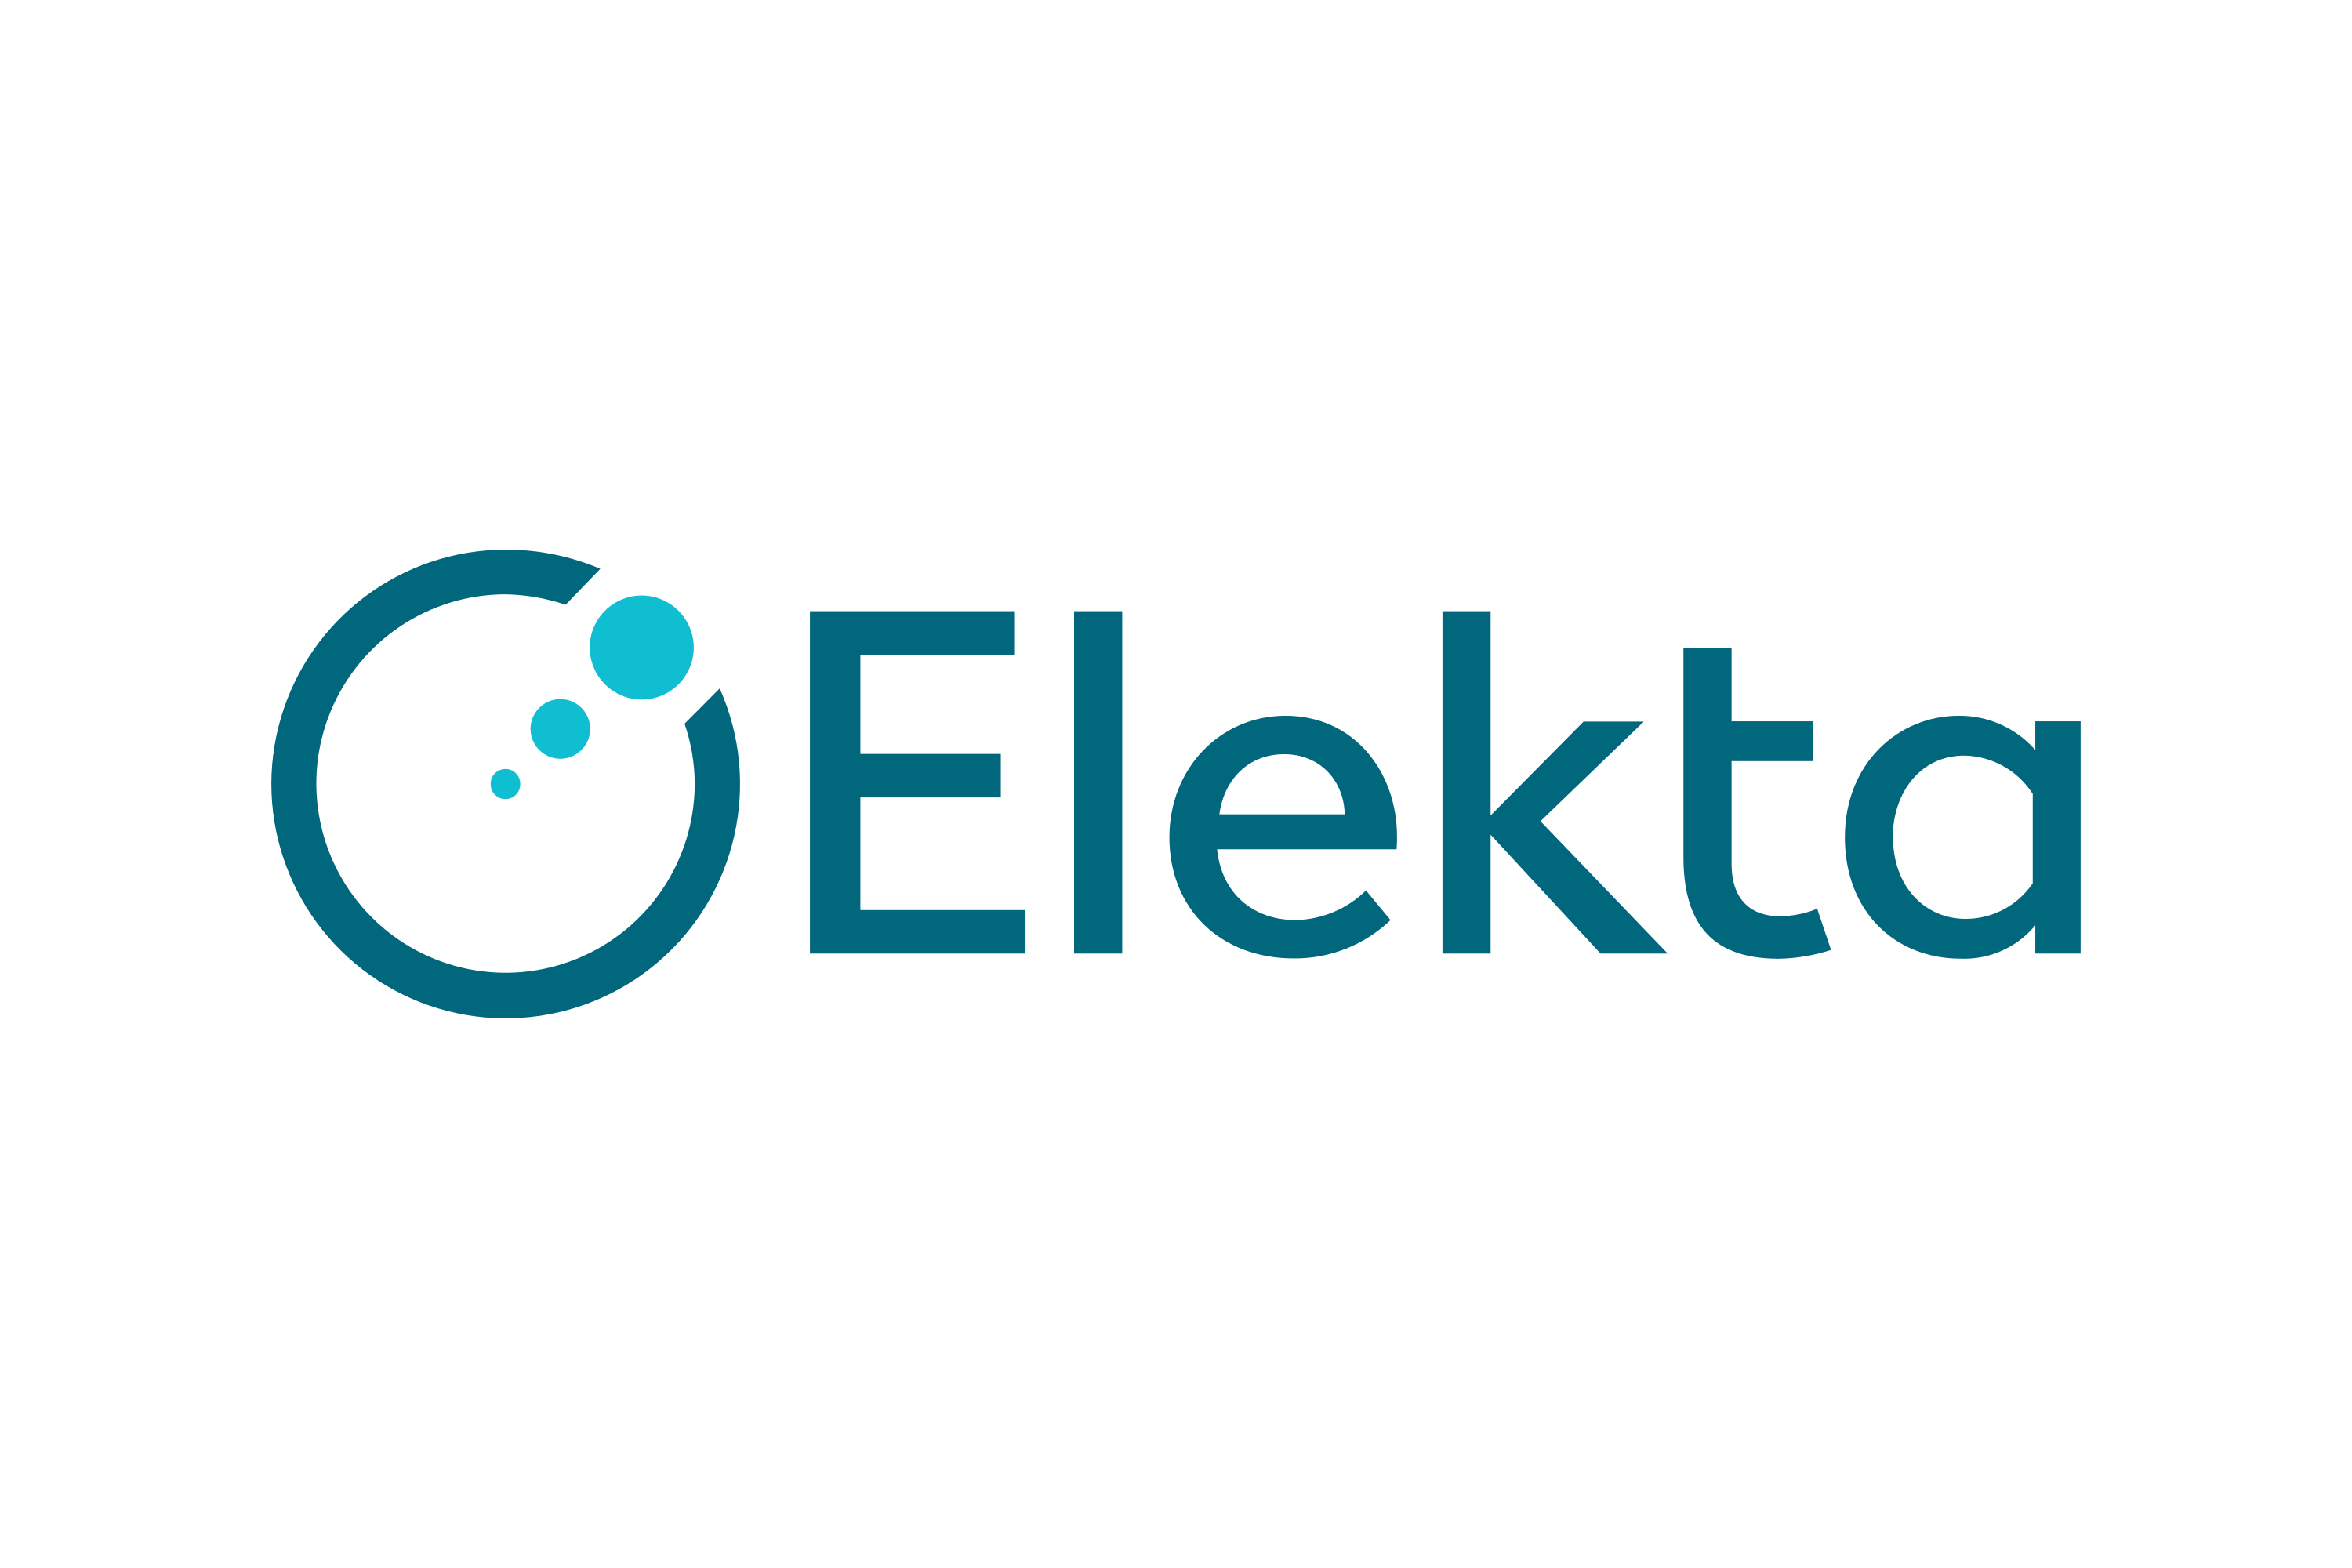 Elekta Logo